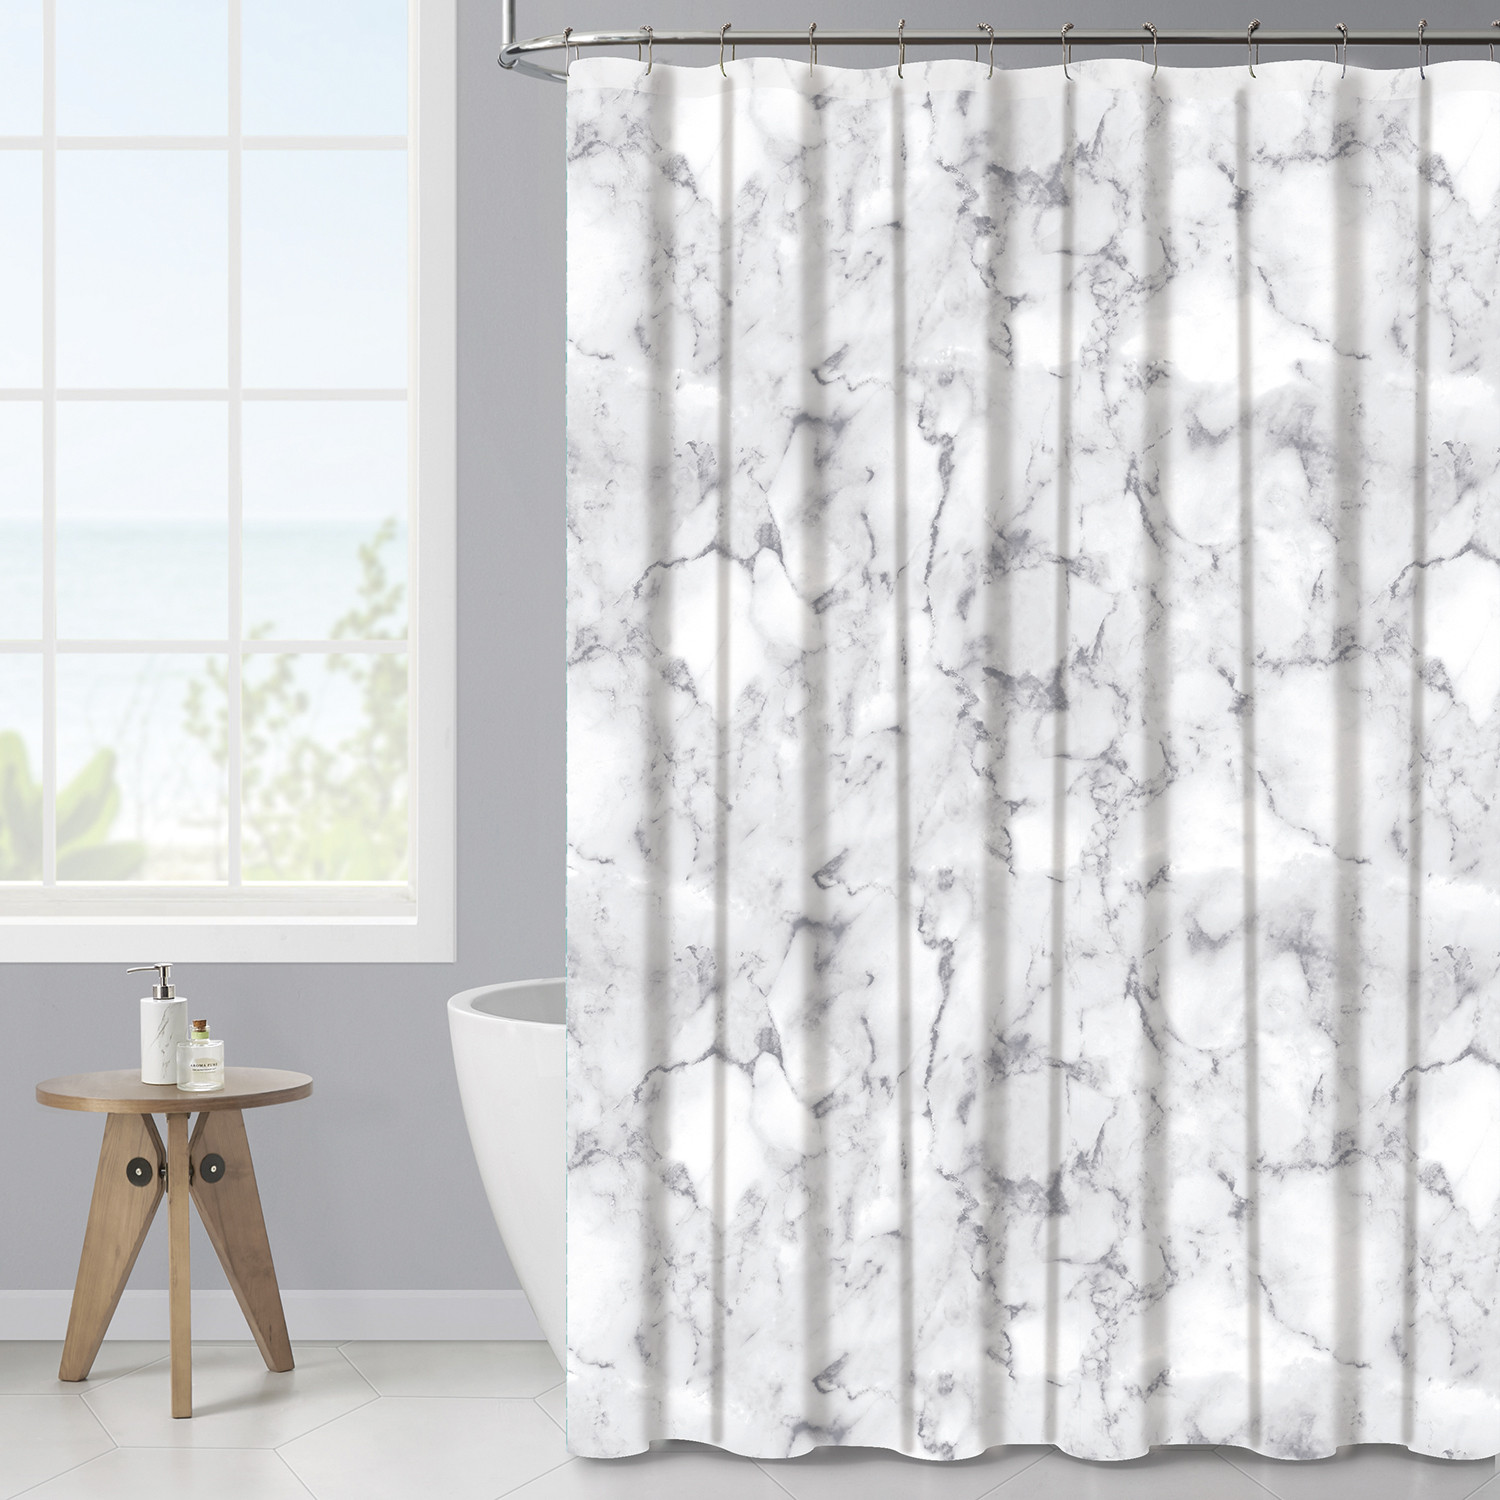 White Marble Design Shower Curtains 180 x 180cm Image